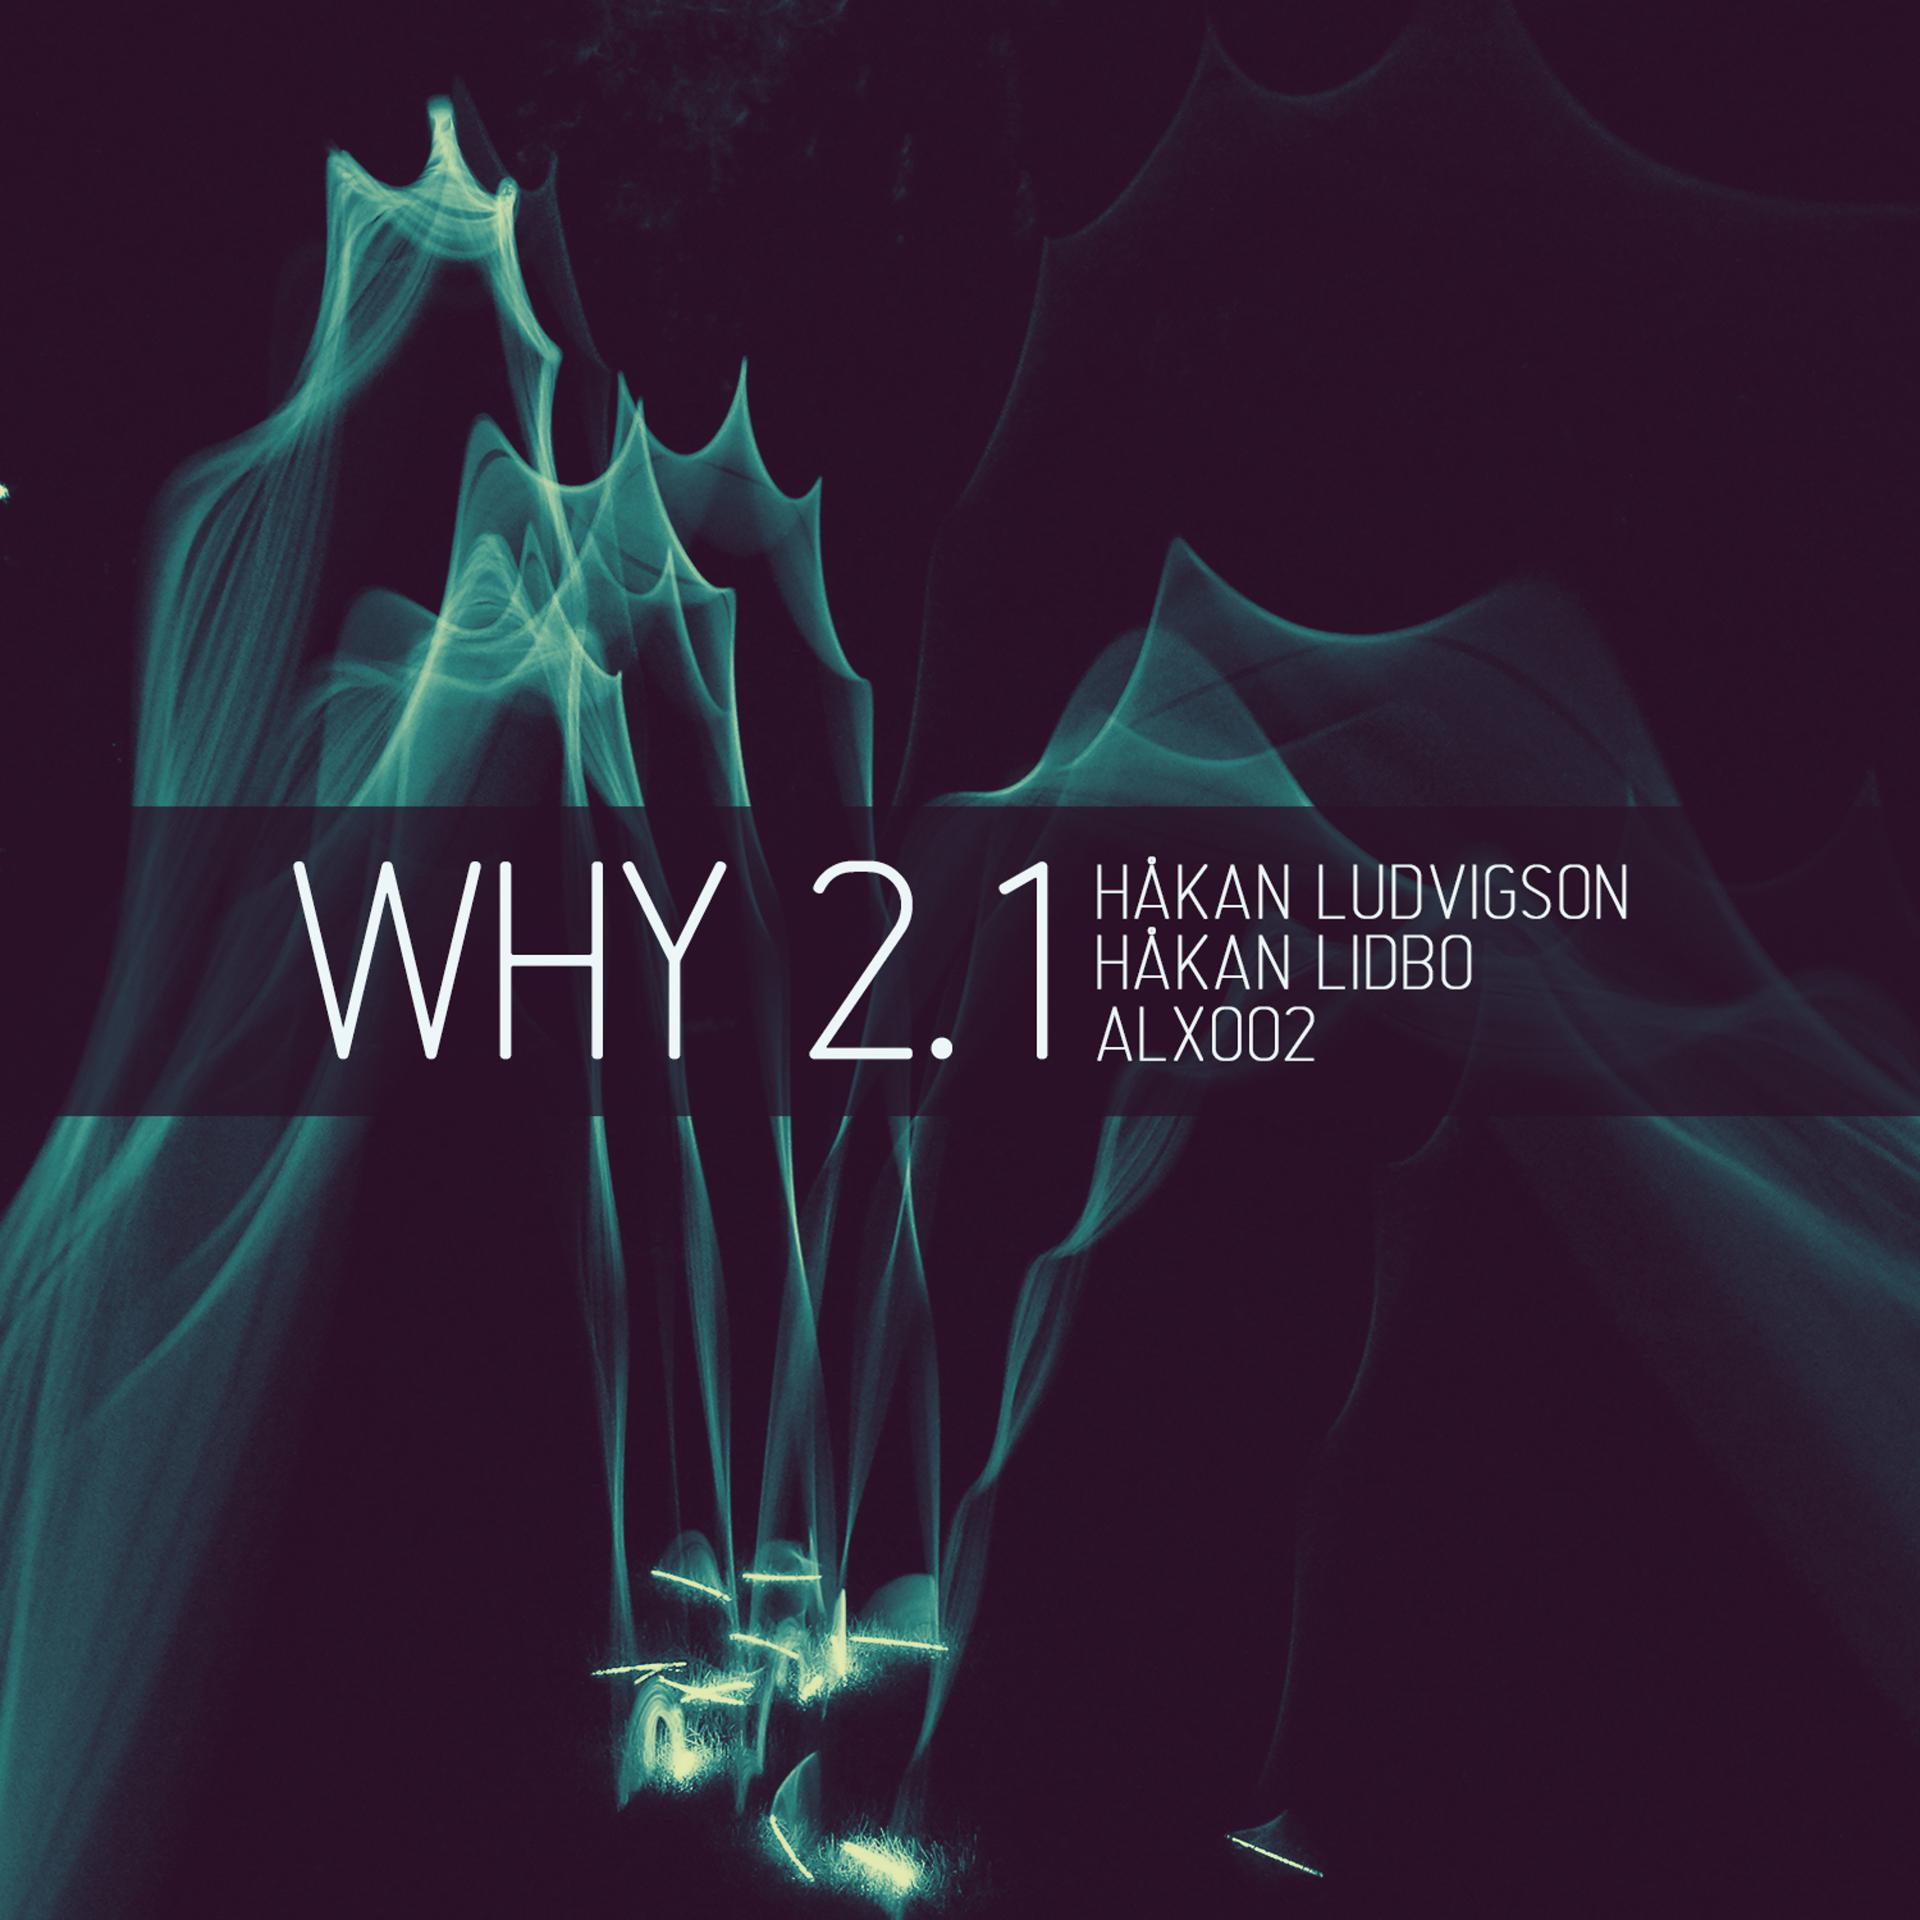 Постер к треку Hakan Ludvigson, Hakan Lidbo - Why 2.1 (Håkan Lidbo Version)